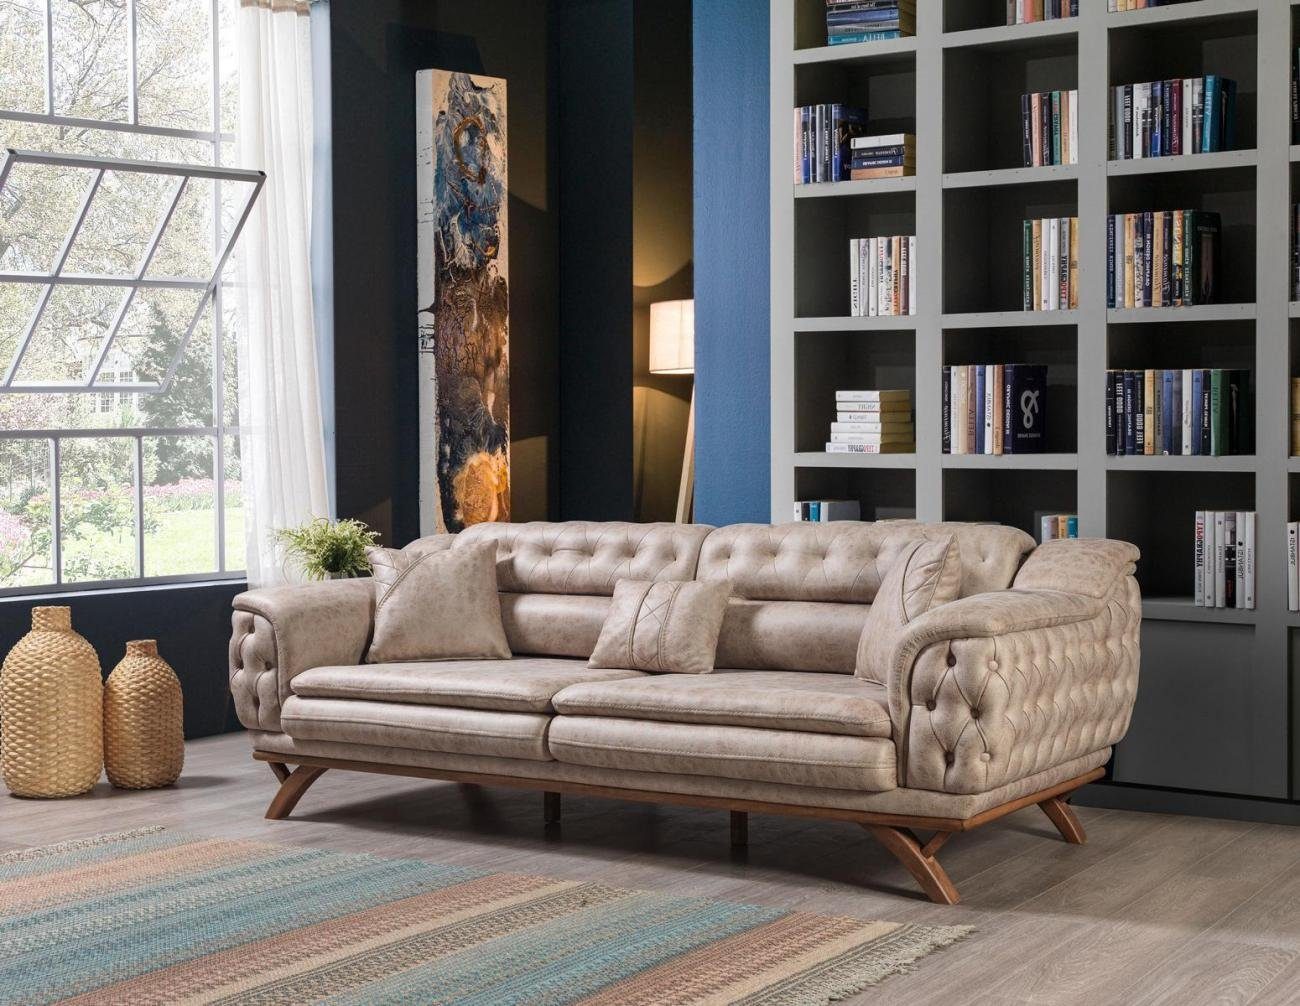 JVmoebel 3-Sitzer Chesterfield 3 Sitzer Beige Design Couchen Polster Sofas Couch, 1 Teile, Made in Europa